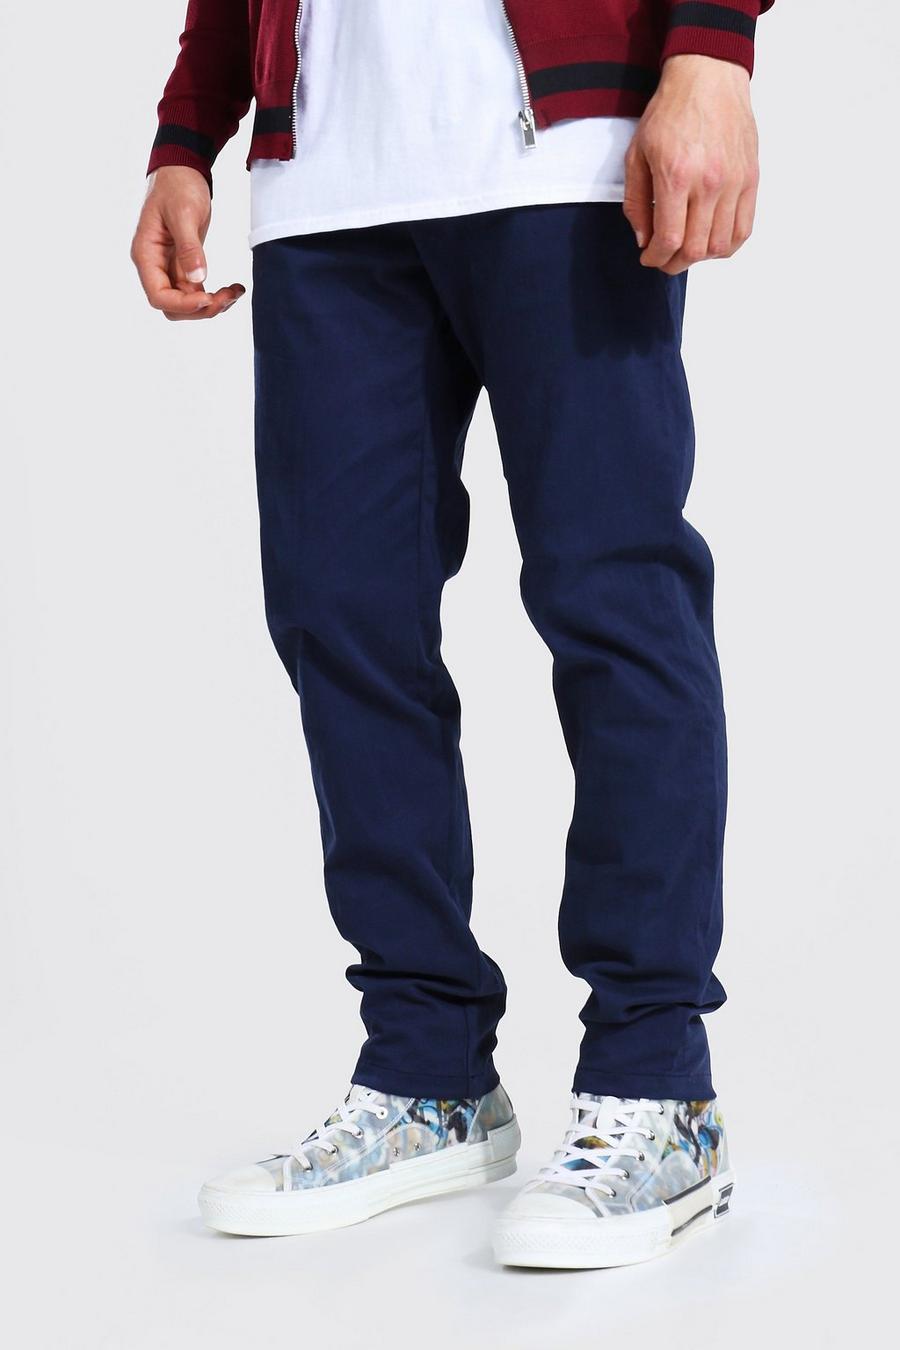 Pantalón chino pitillo, Navy azul marino